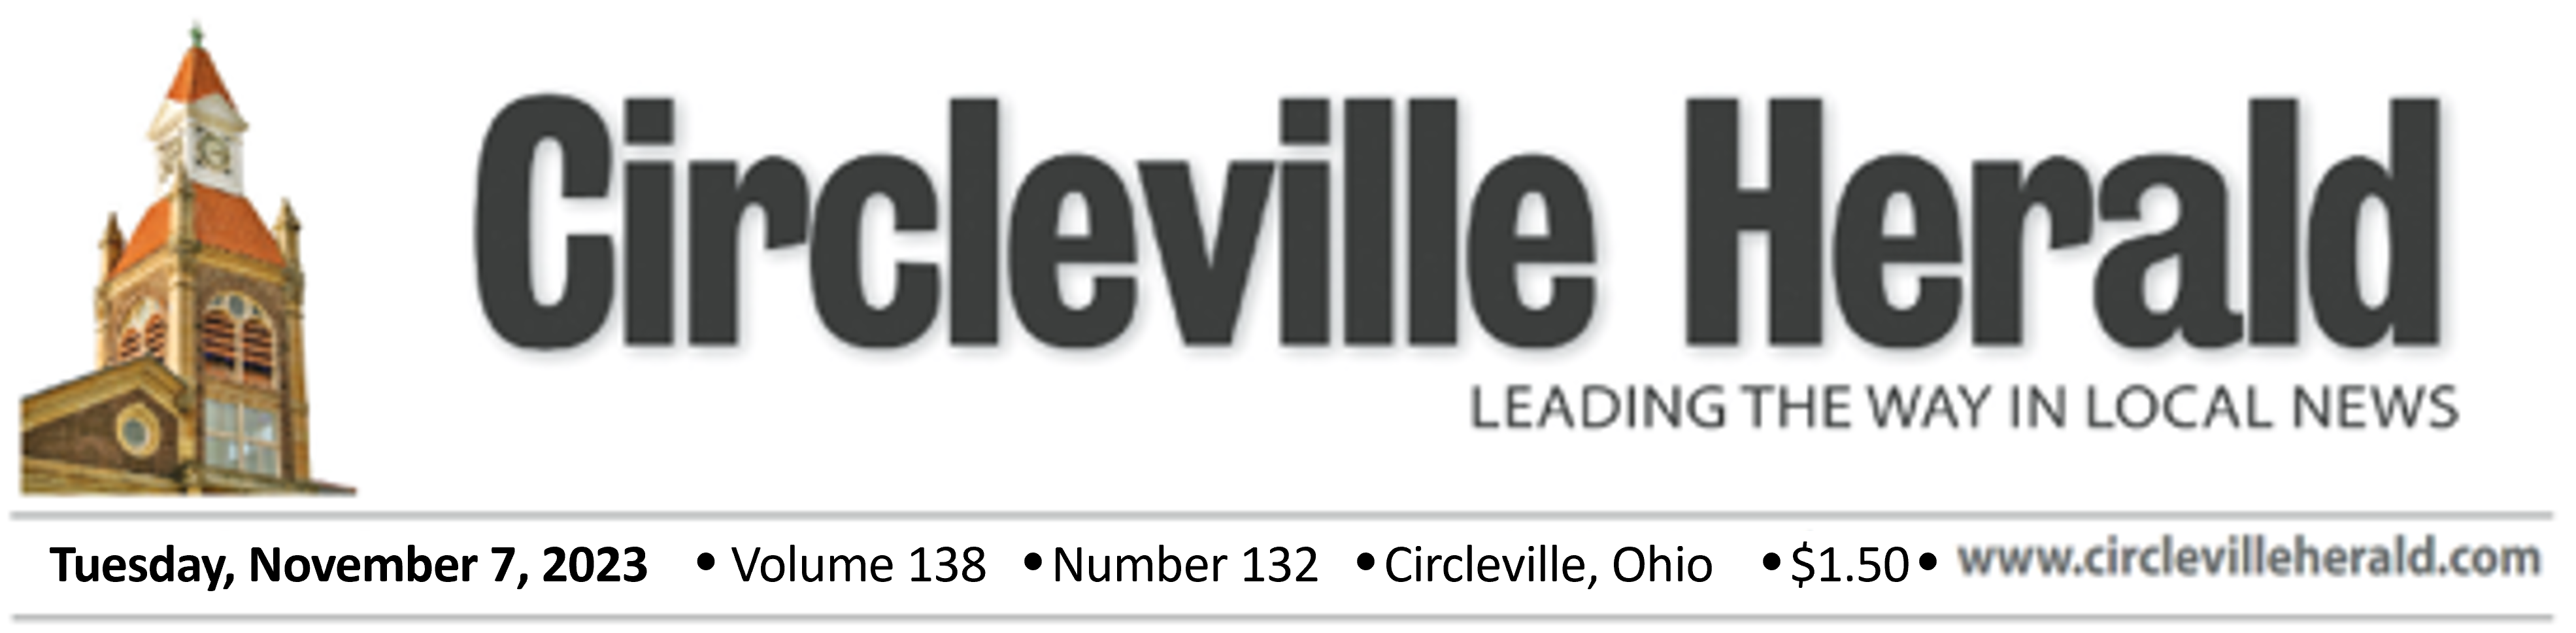 Circleville Herald Header for November 7